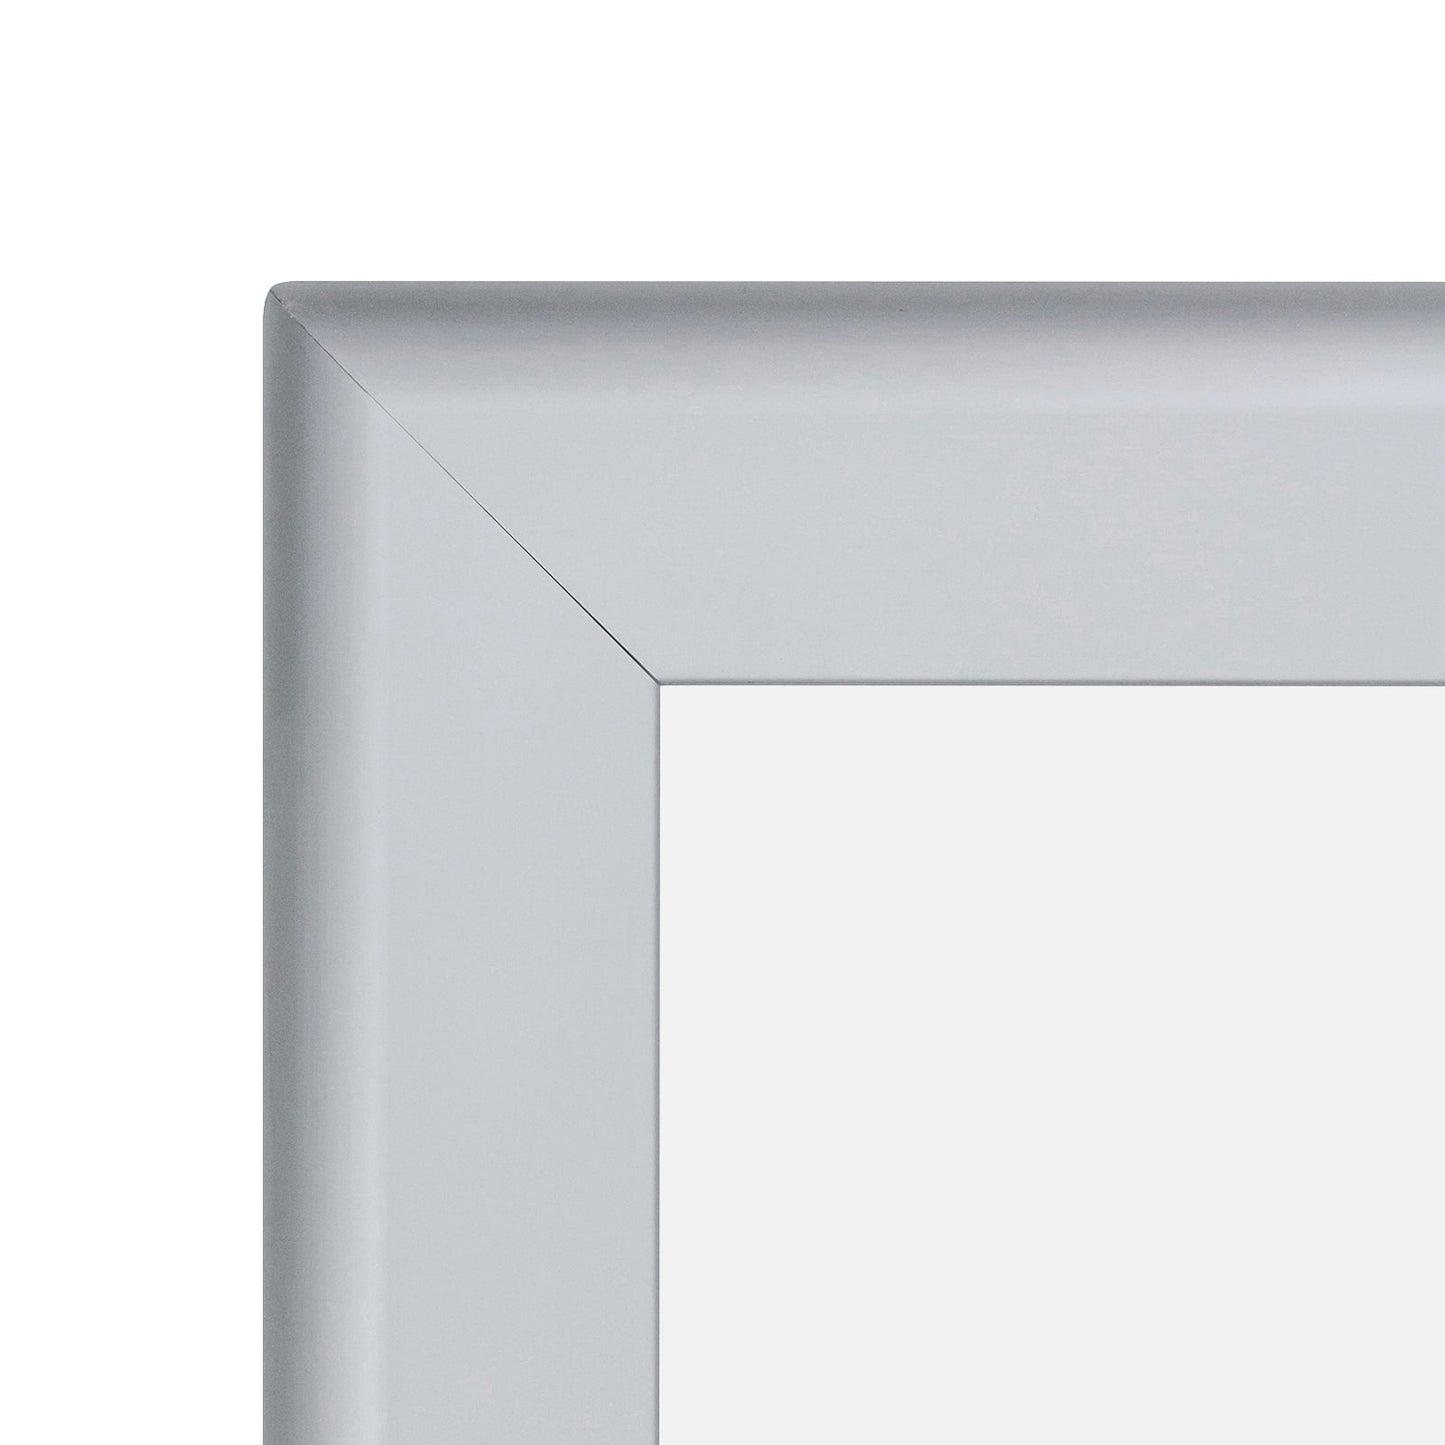 32x50 Silver SnapeZo® Snap Frame - 1.7" Profile - Snap Frames Direct